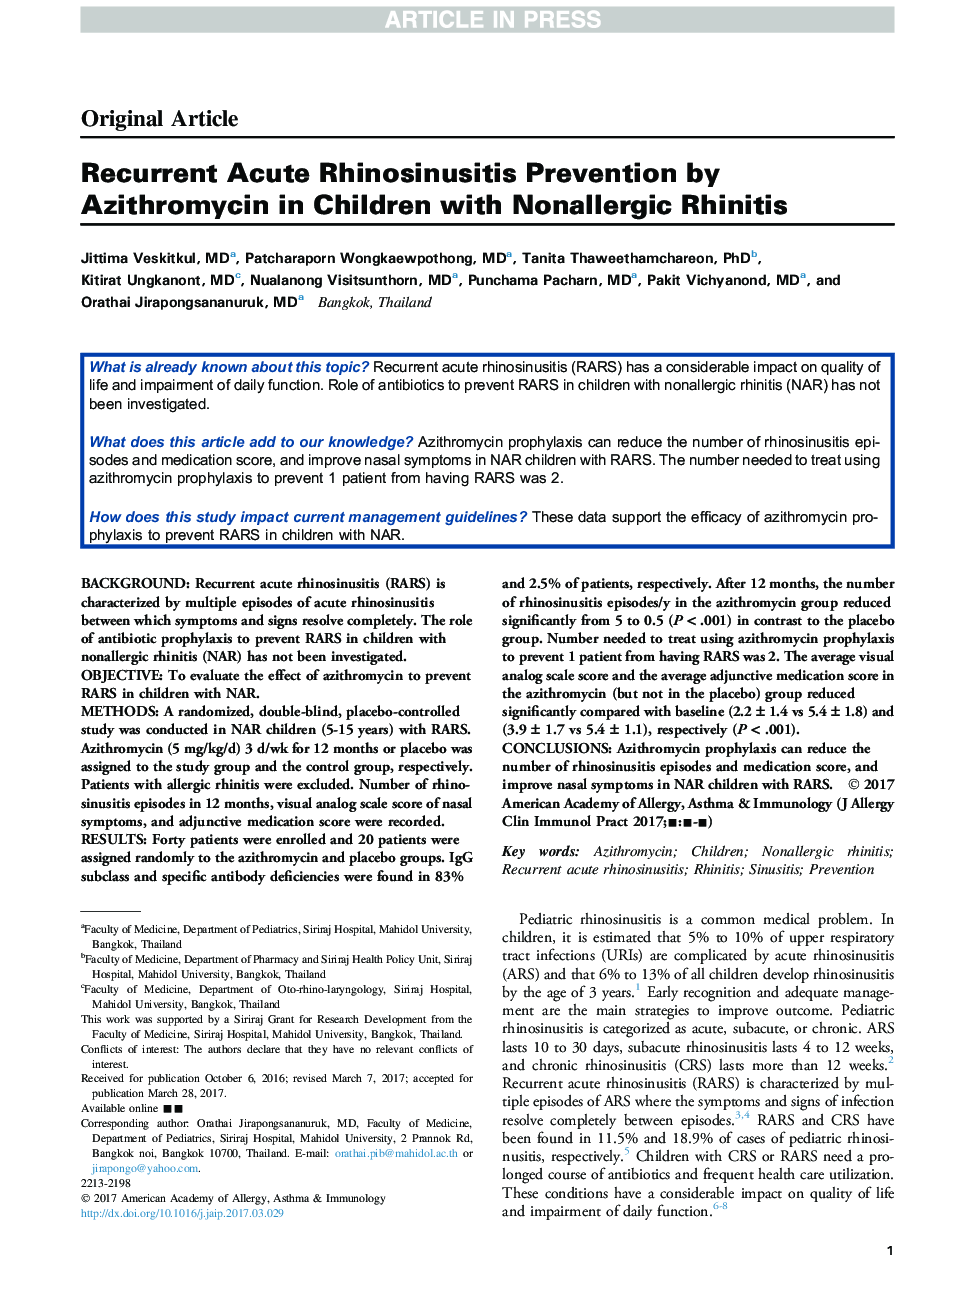 Recurrent Acute Rhinosinusitis Prevention by Azithromycin in Children with Nonallergic Rhinitis